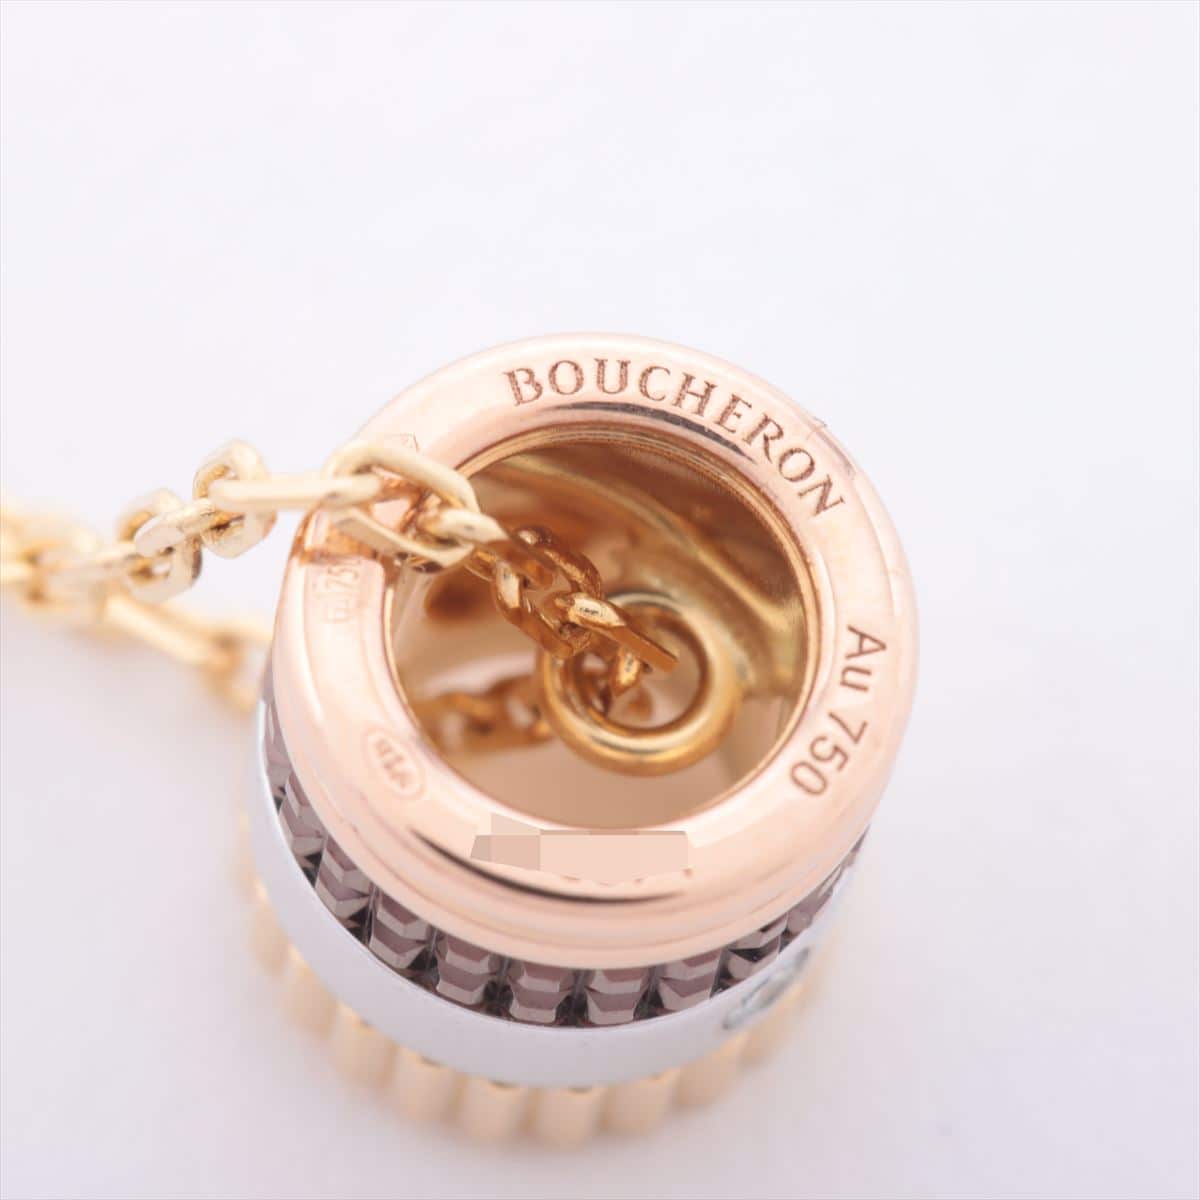 Boucheron Quatre Classic diamond Necklace 750 YG×PG×WG 5.7g